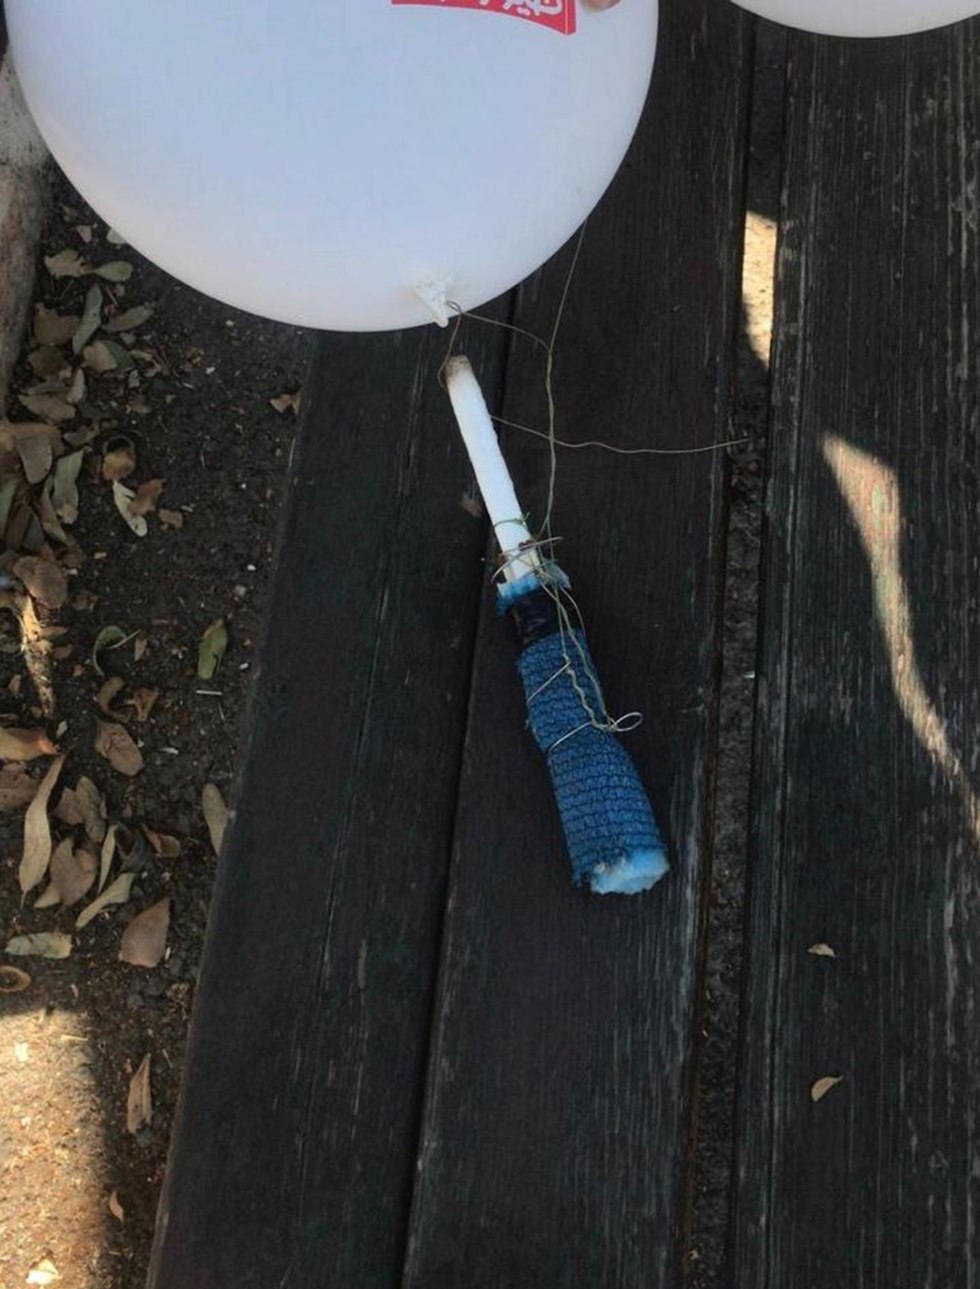 A balloon found in Jerusalem (צילום: דוברות המשטרה)